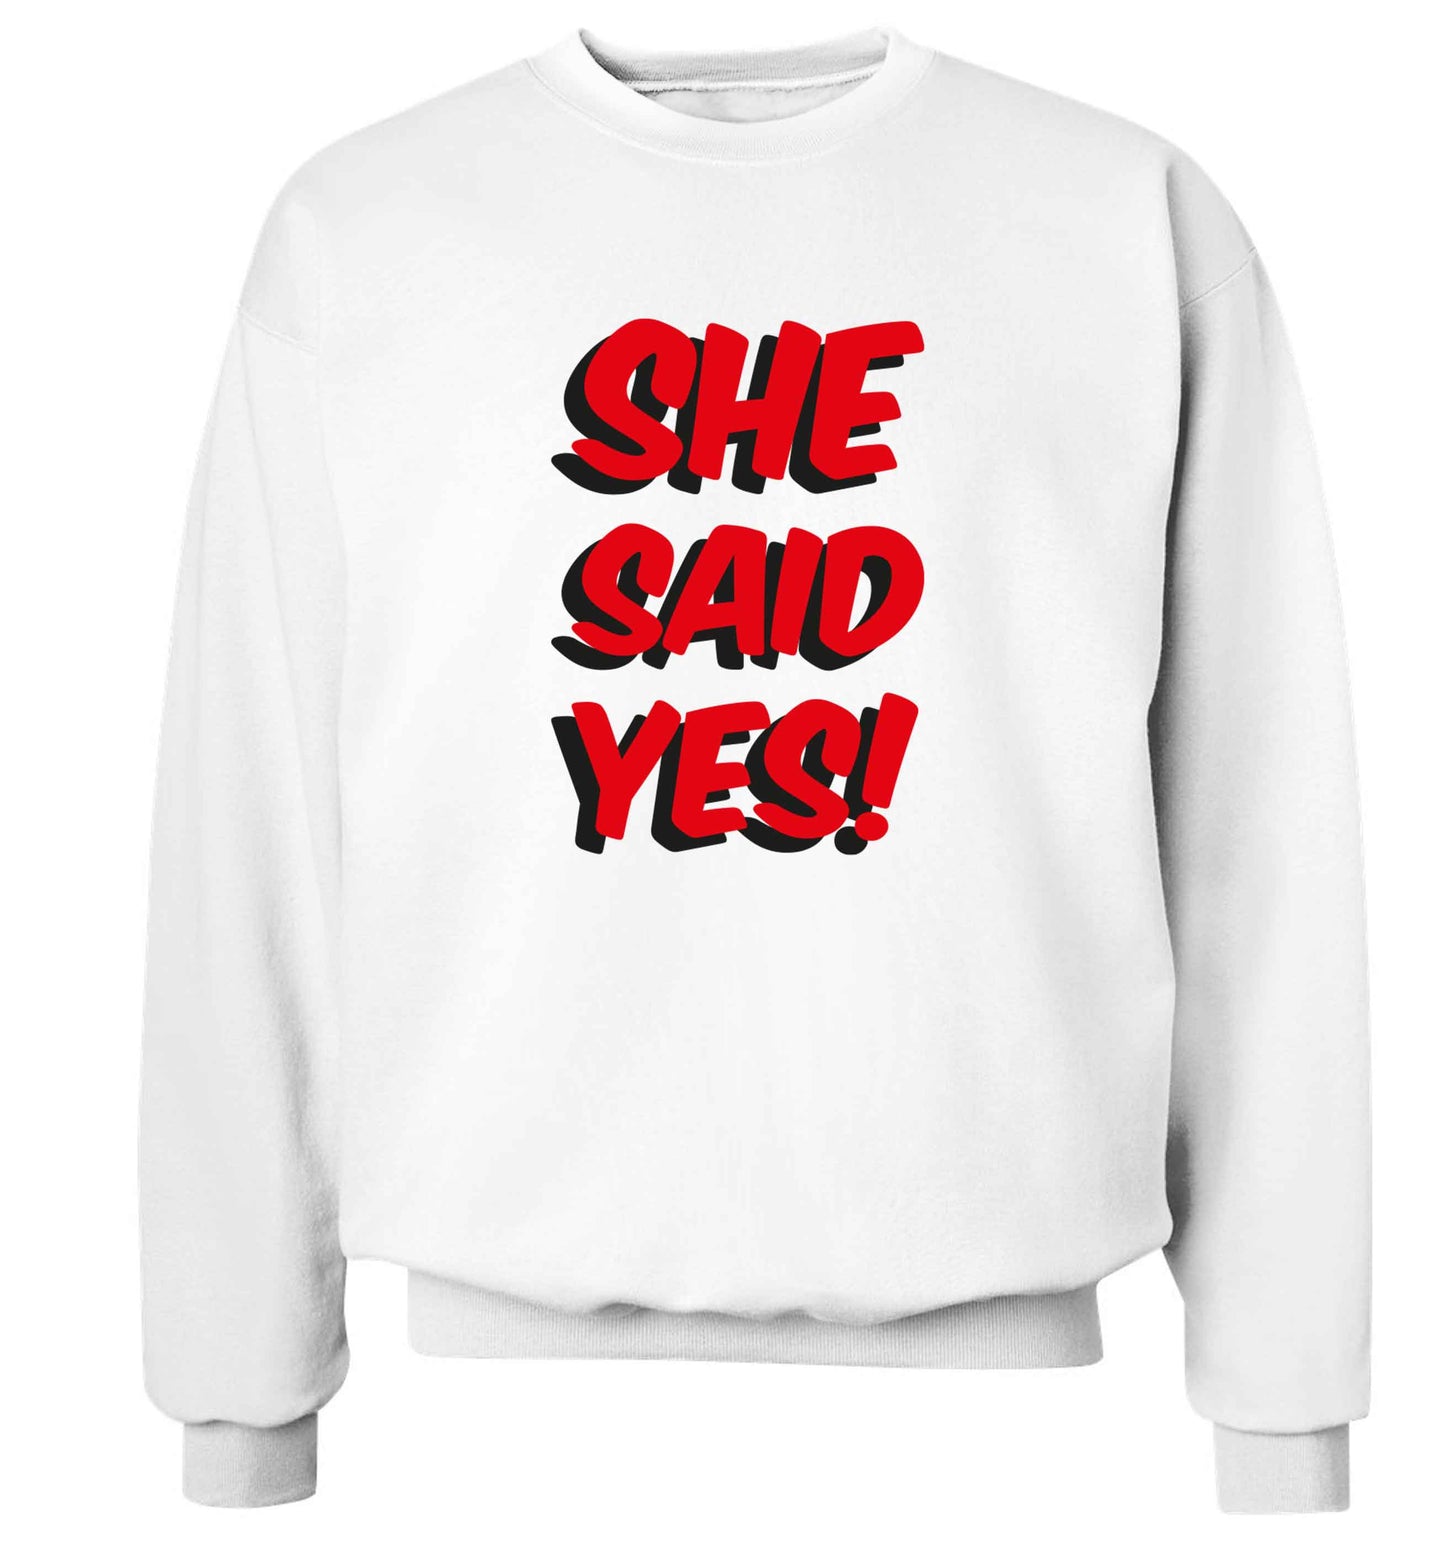 She said yes adult's unisex white sweater 2XL